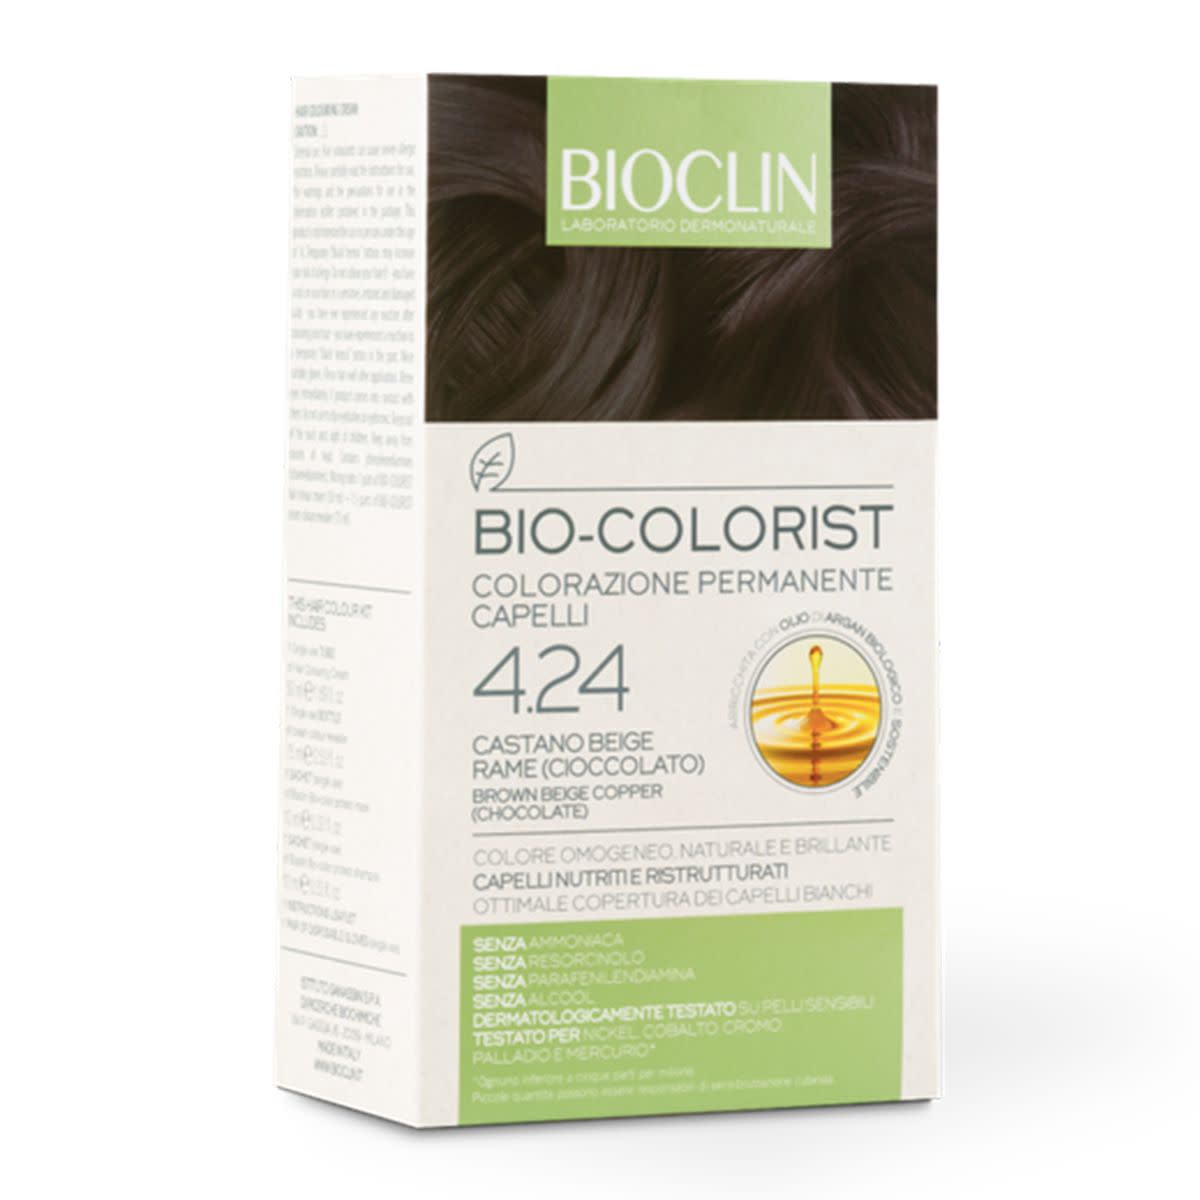 975025103 - Bioclin Bio-colorist 4.24 Castano Beige Rame - 4702320_2.jpg